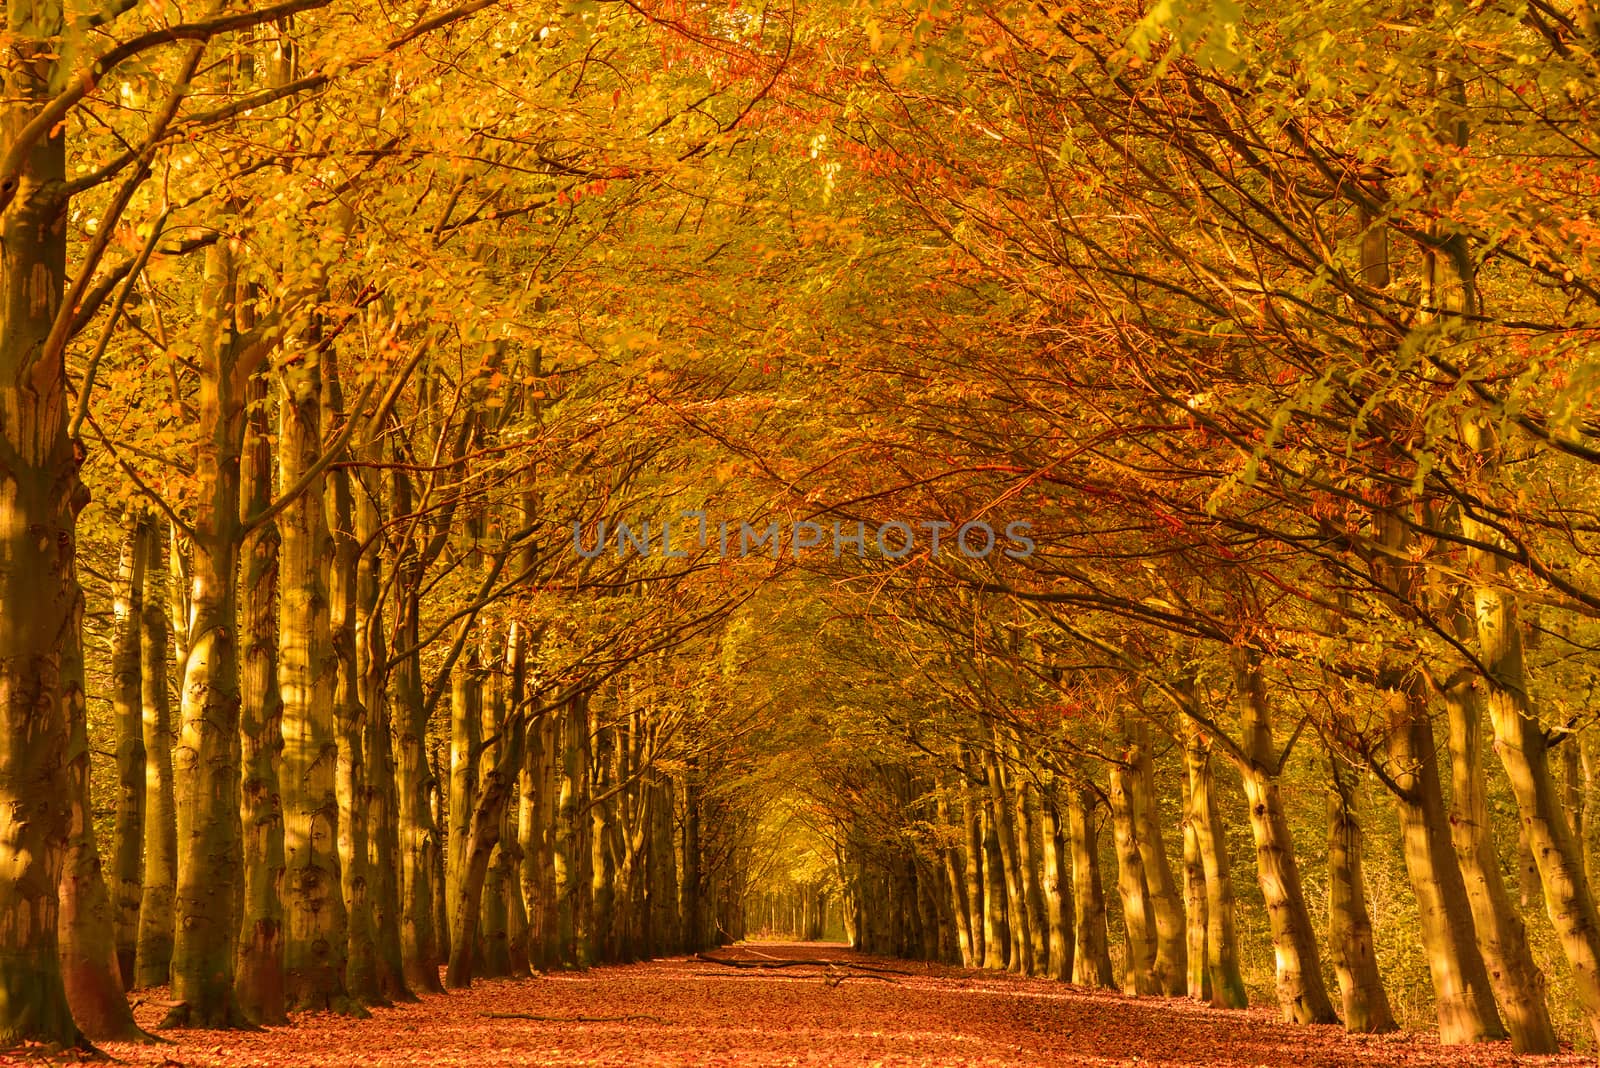 Autumn lane by pljvv